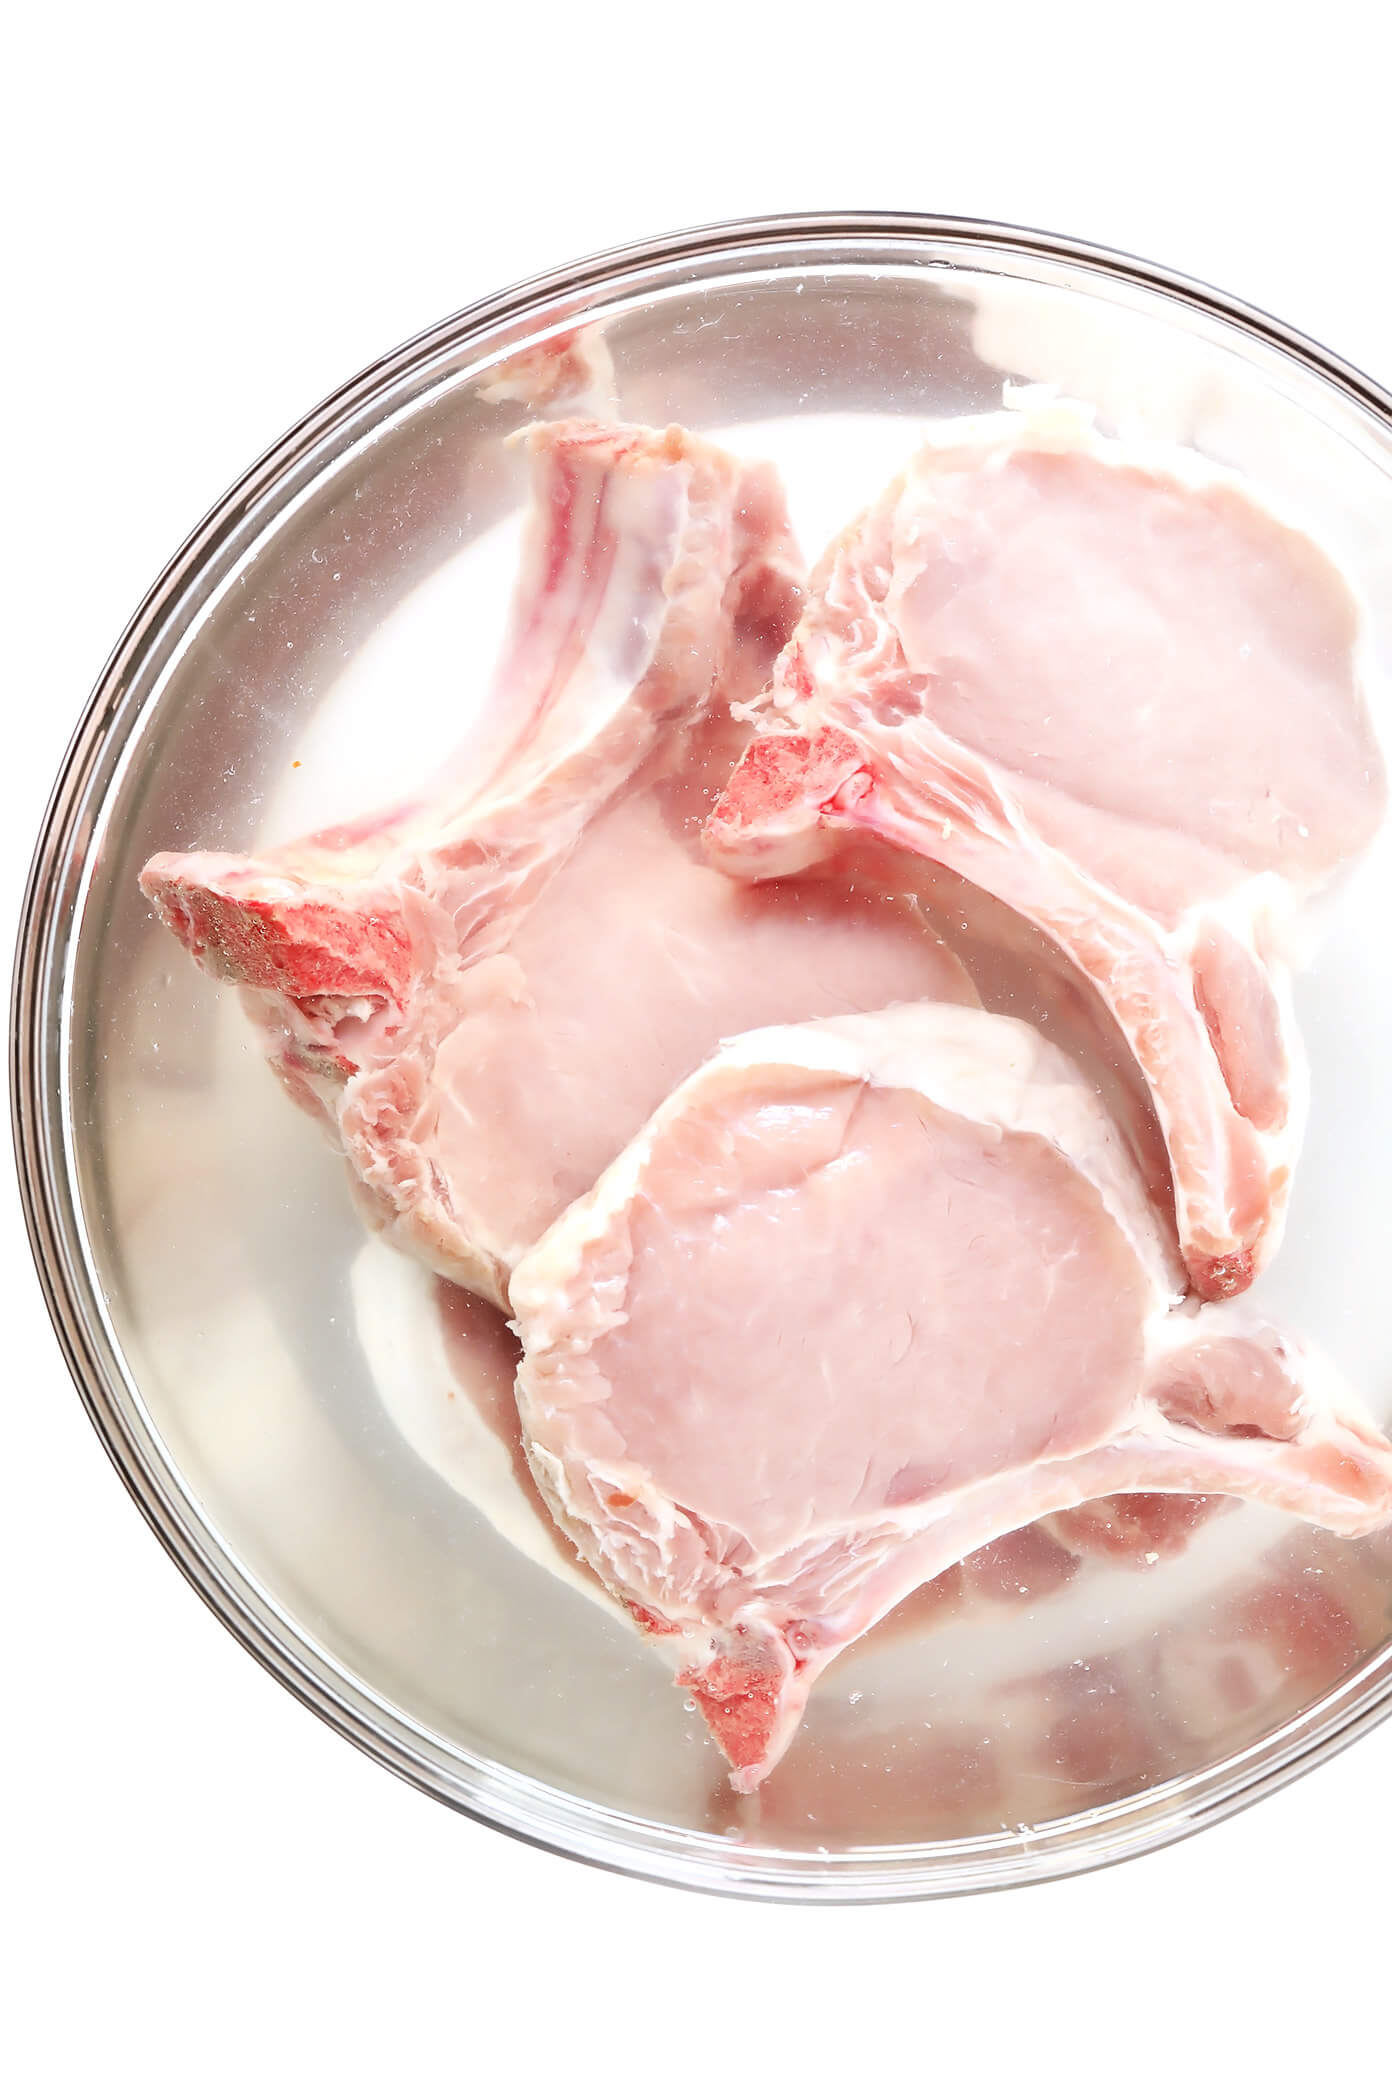 How To Brine Pork Chops